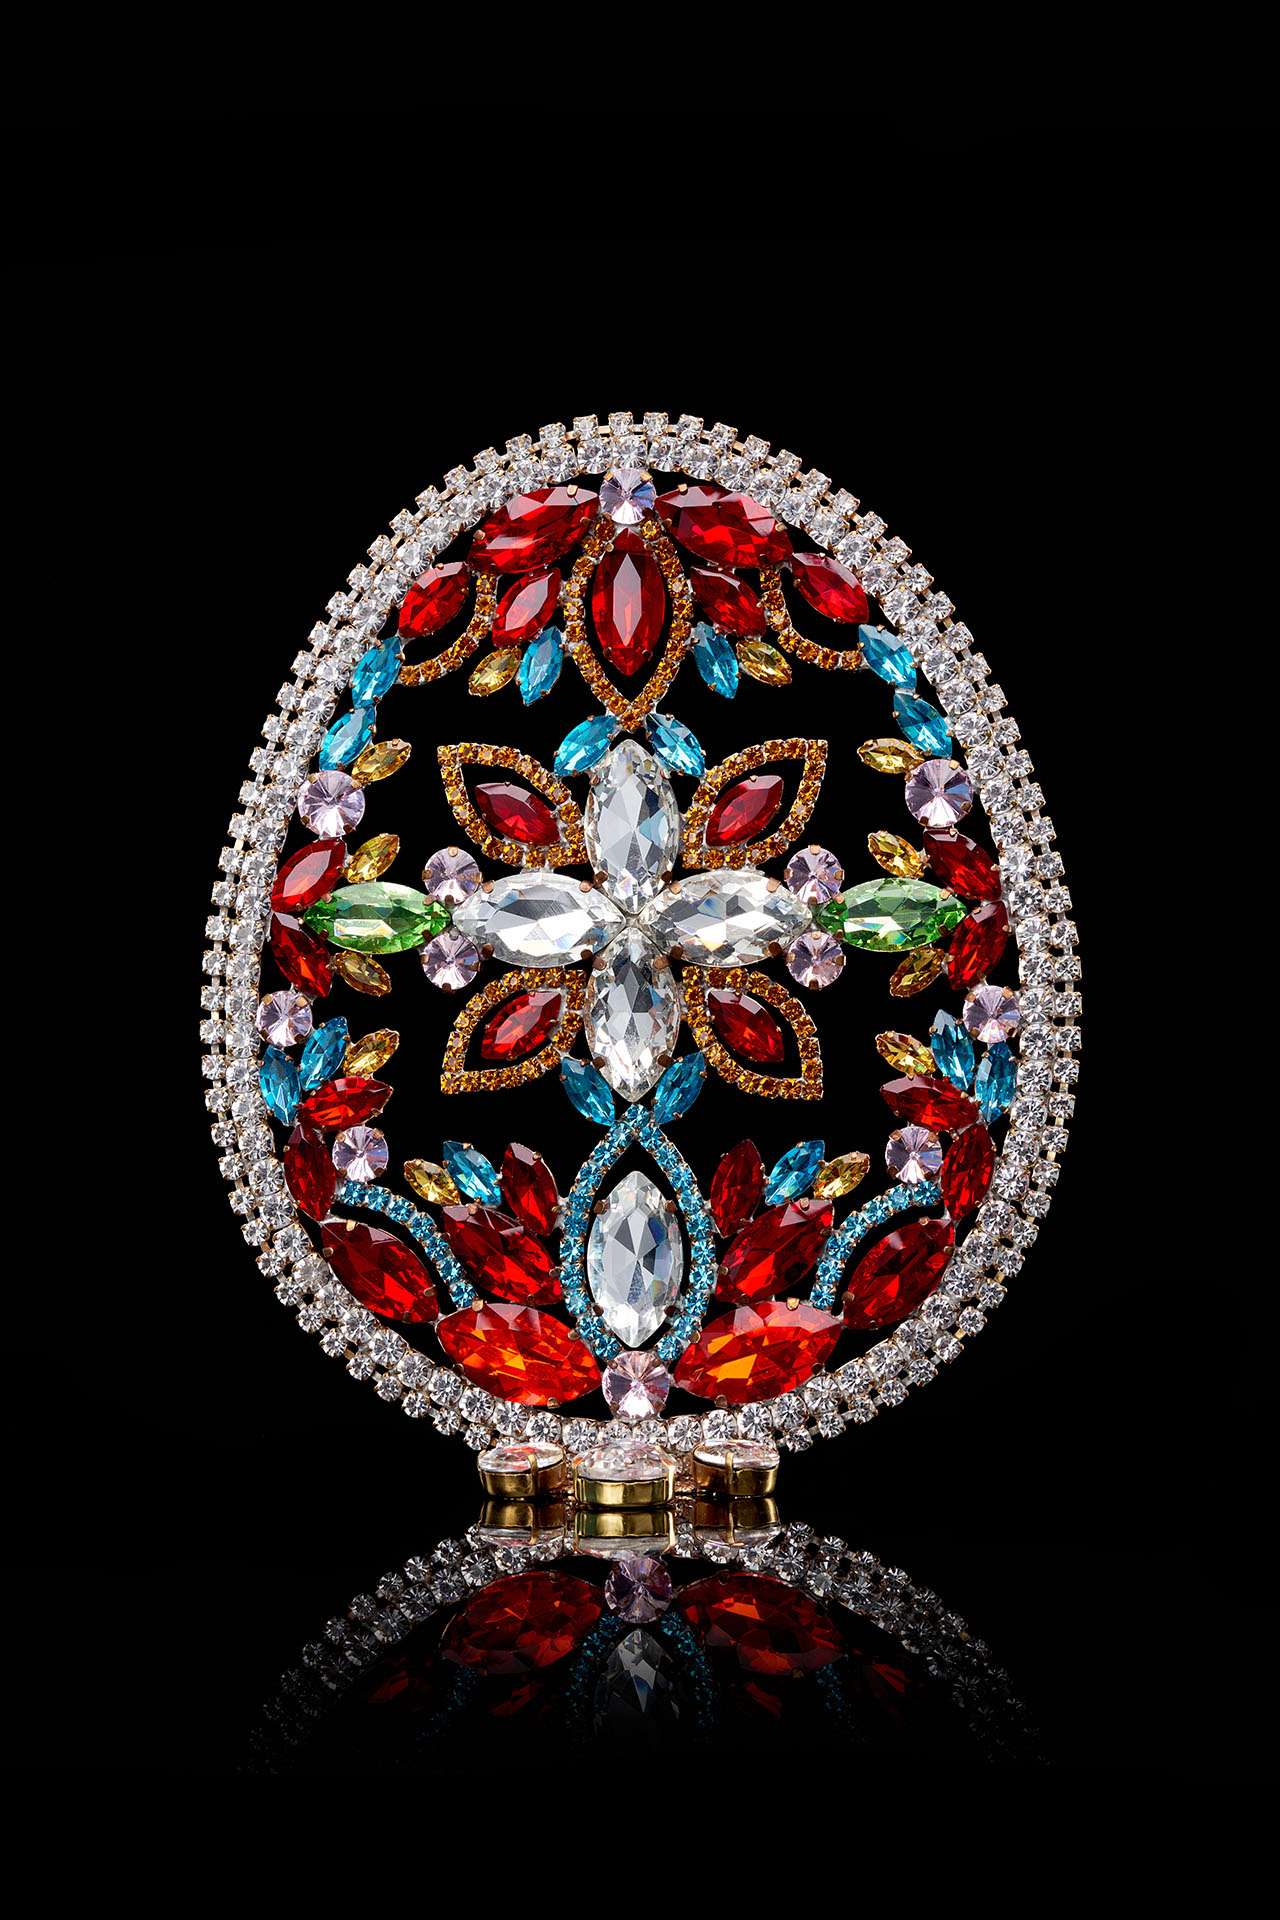 Czech Rhinestone Easter Egg in Festive coloured Crystal